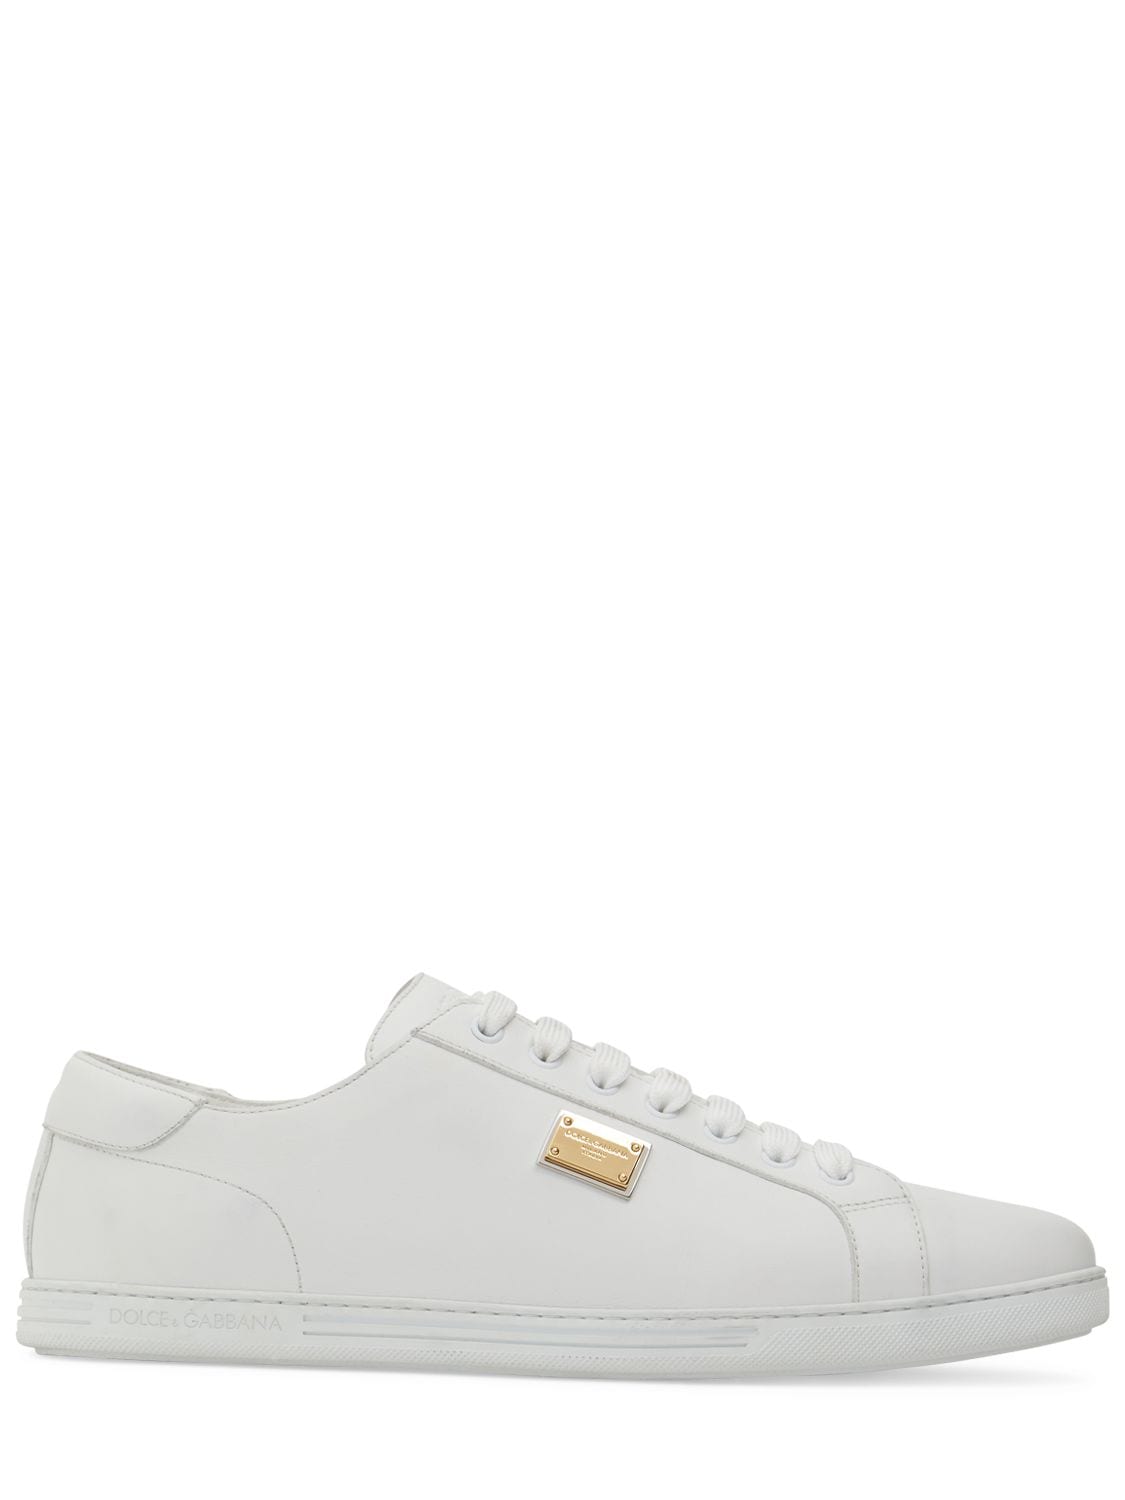 Dolce & Gabbana Saint Tropez Low Top Sneakers In White